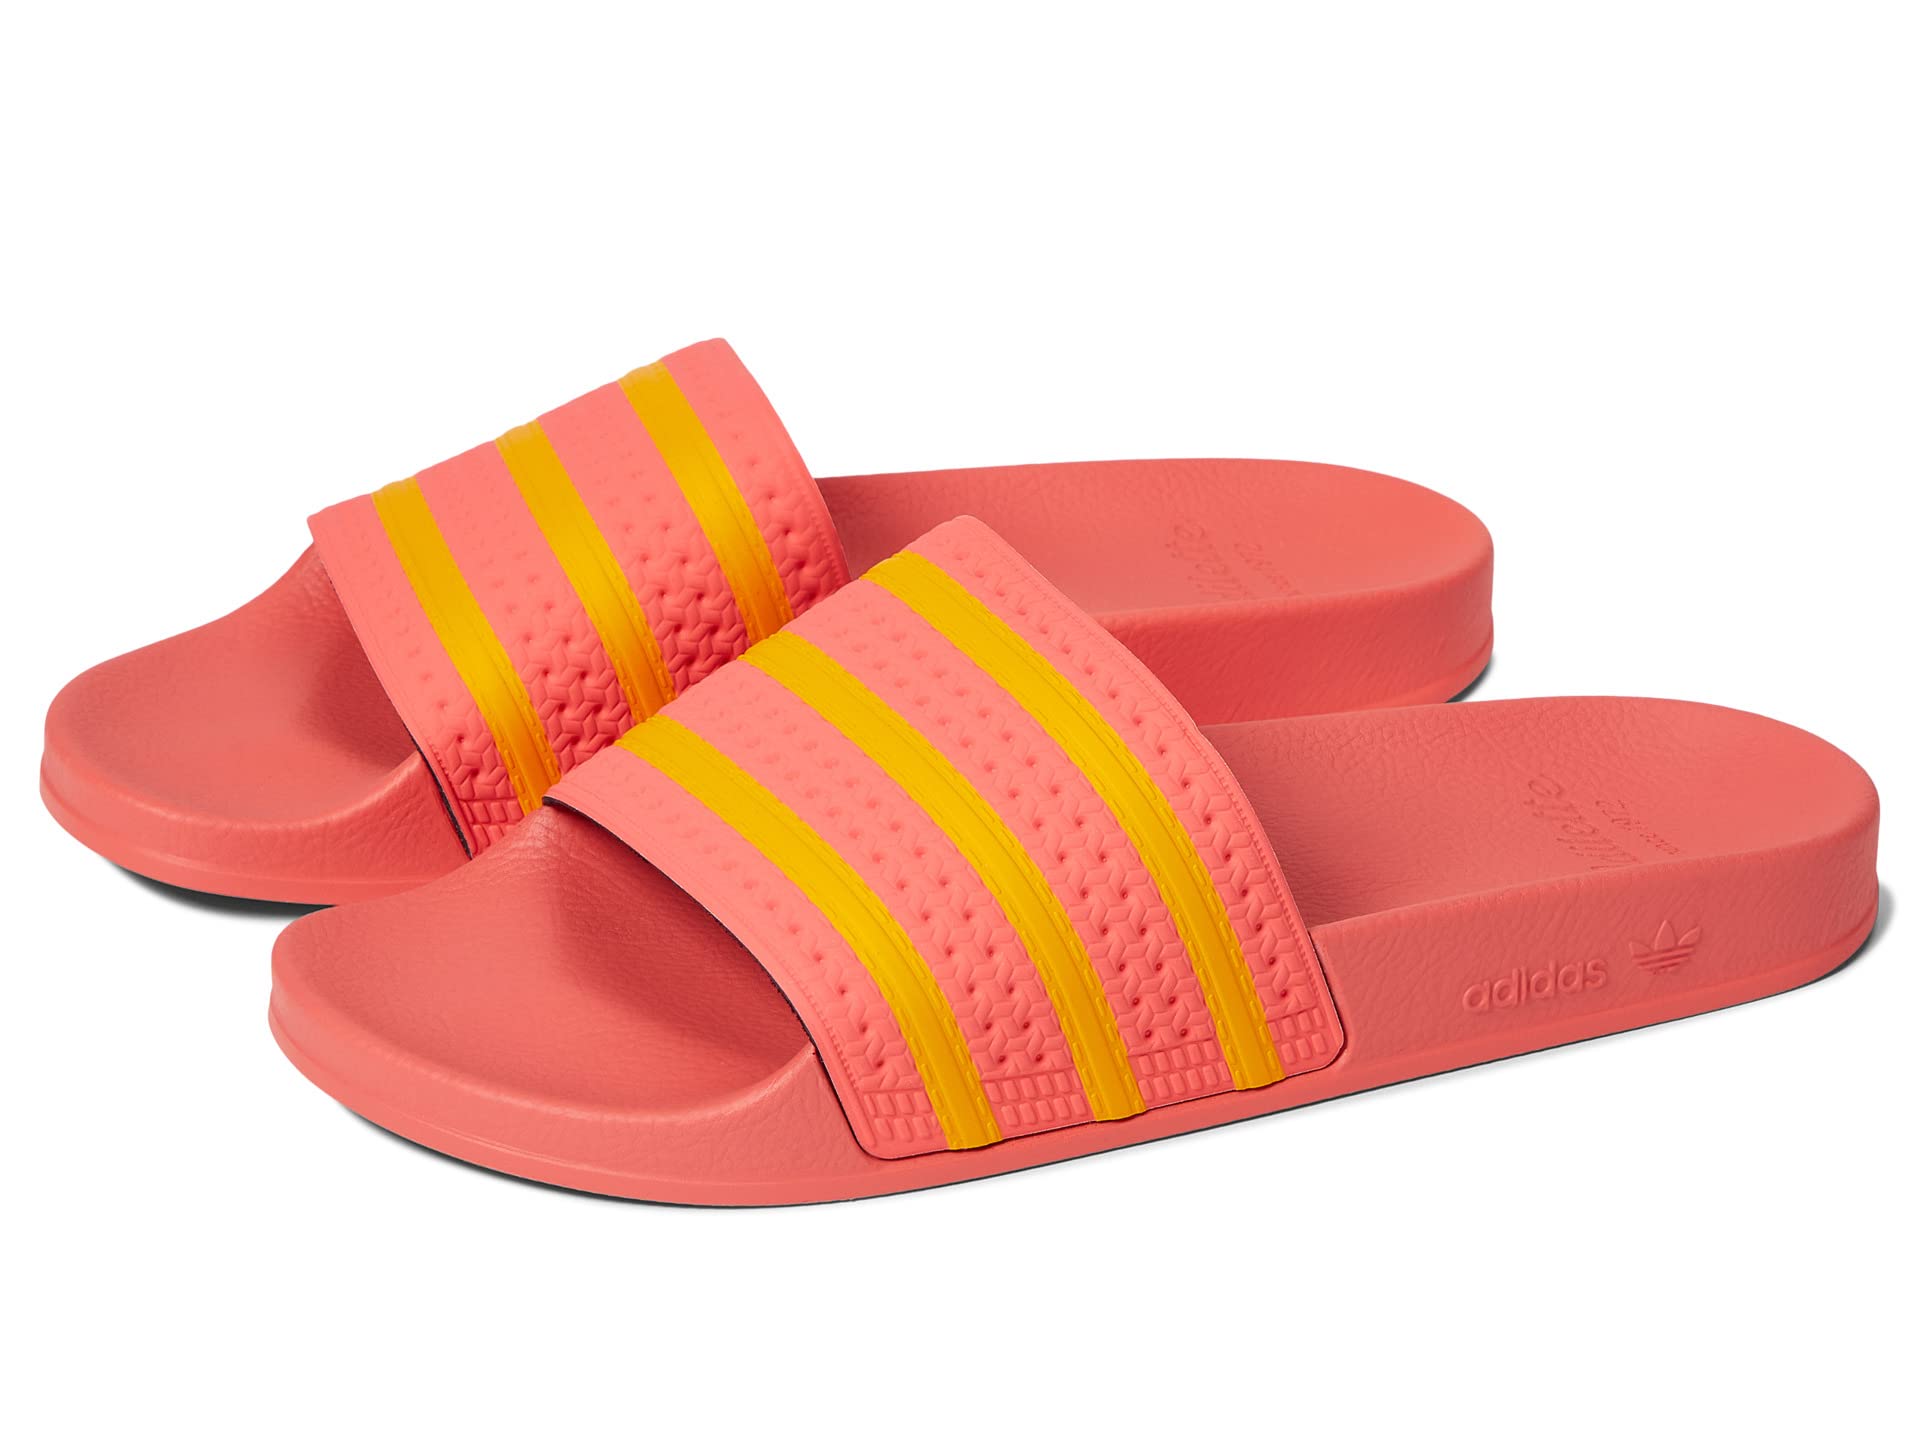 Женские сандалии Adidas Originals Adilette, оранжевый/желтый фотографии